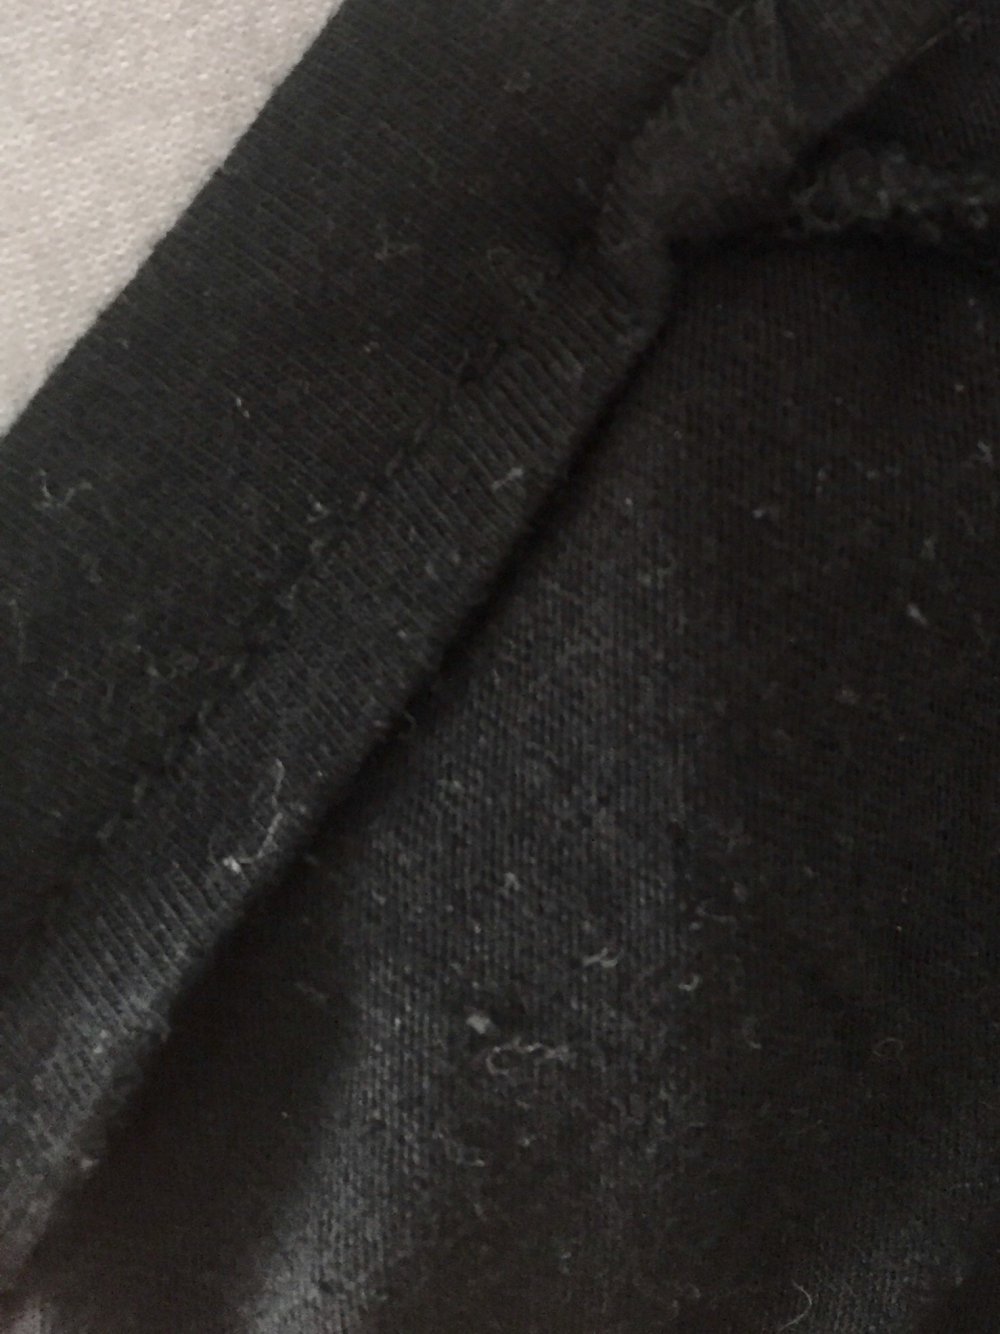 Schwarzes Shirt mit lila Pailletten Muster